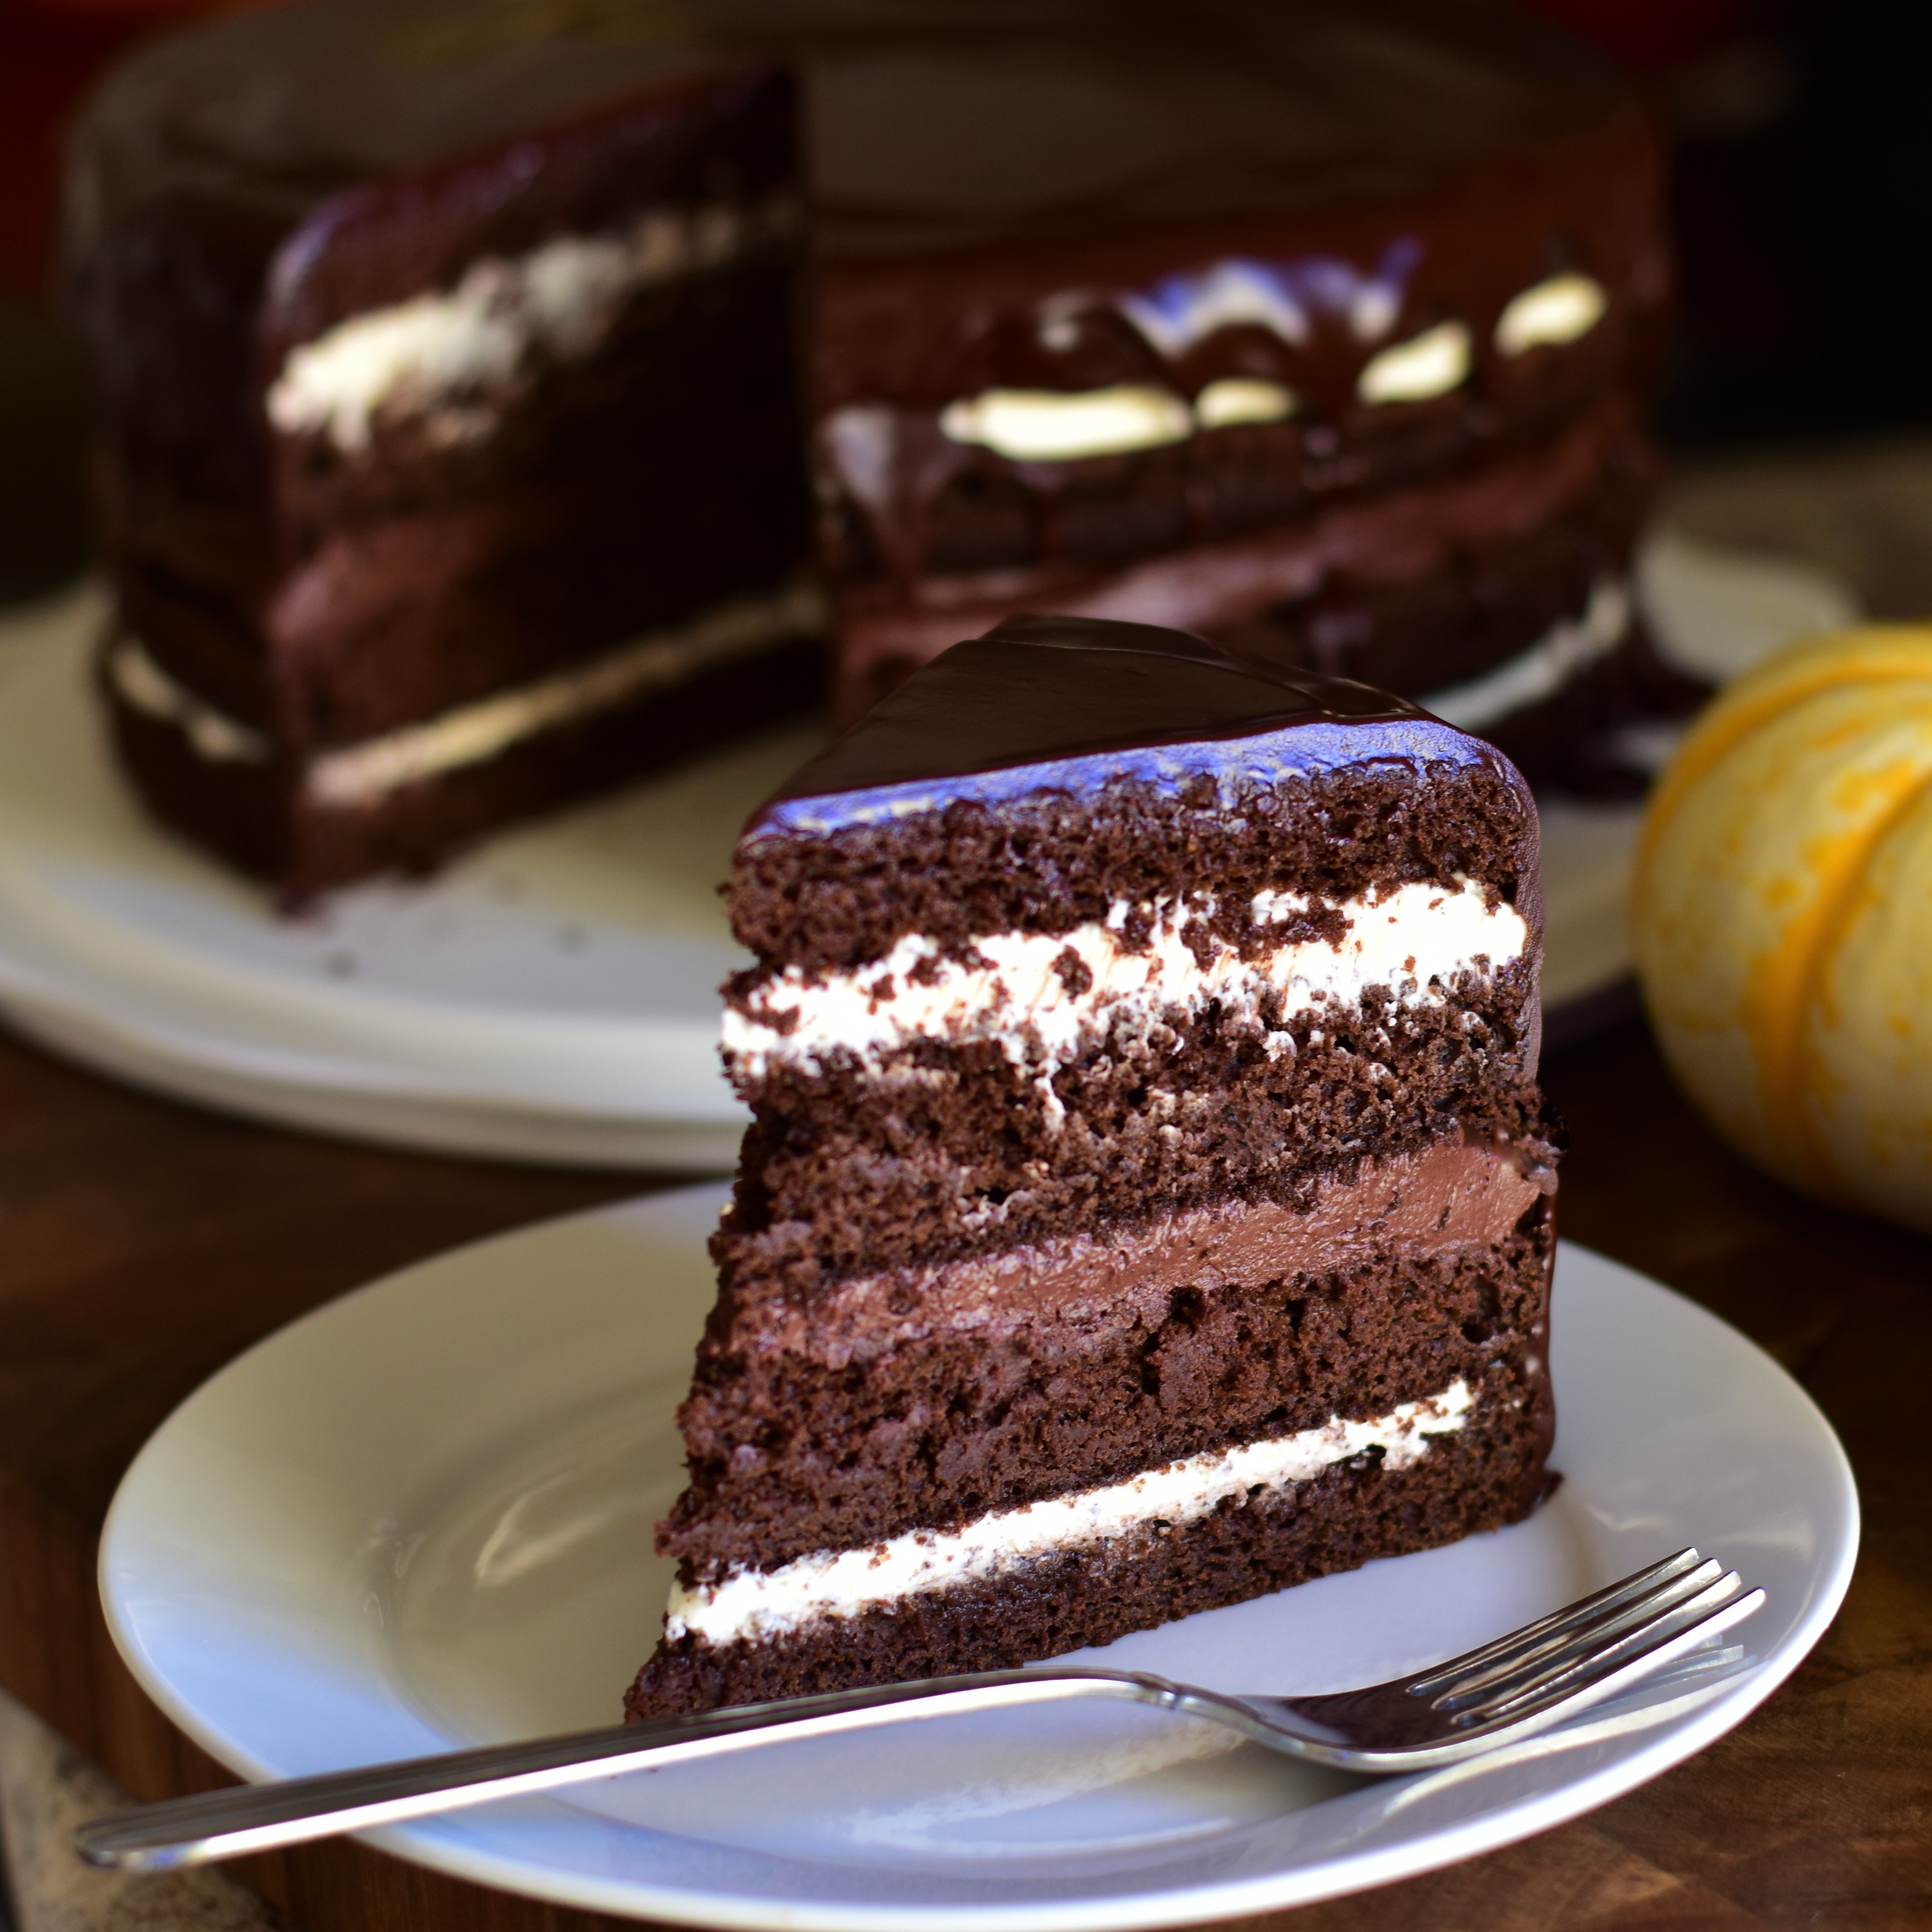 Pumpkin-Chocolate Layer Cake 